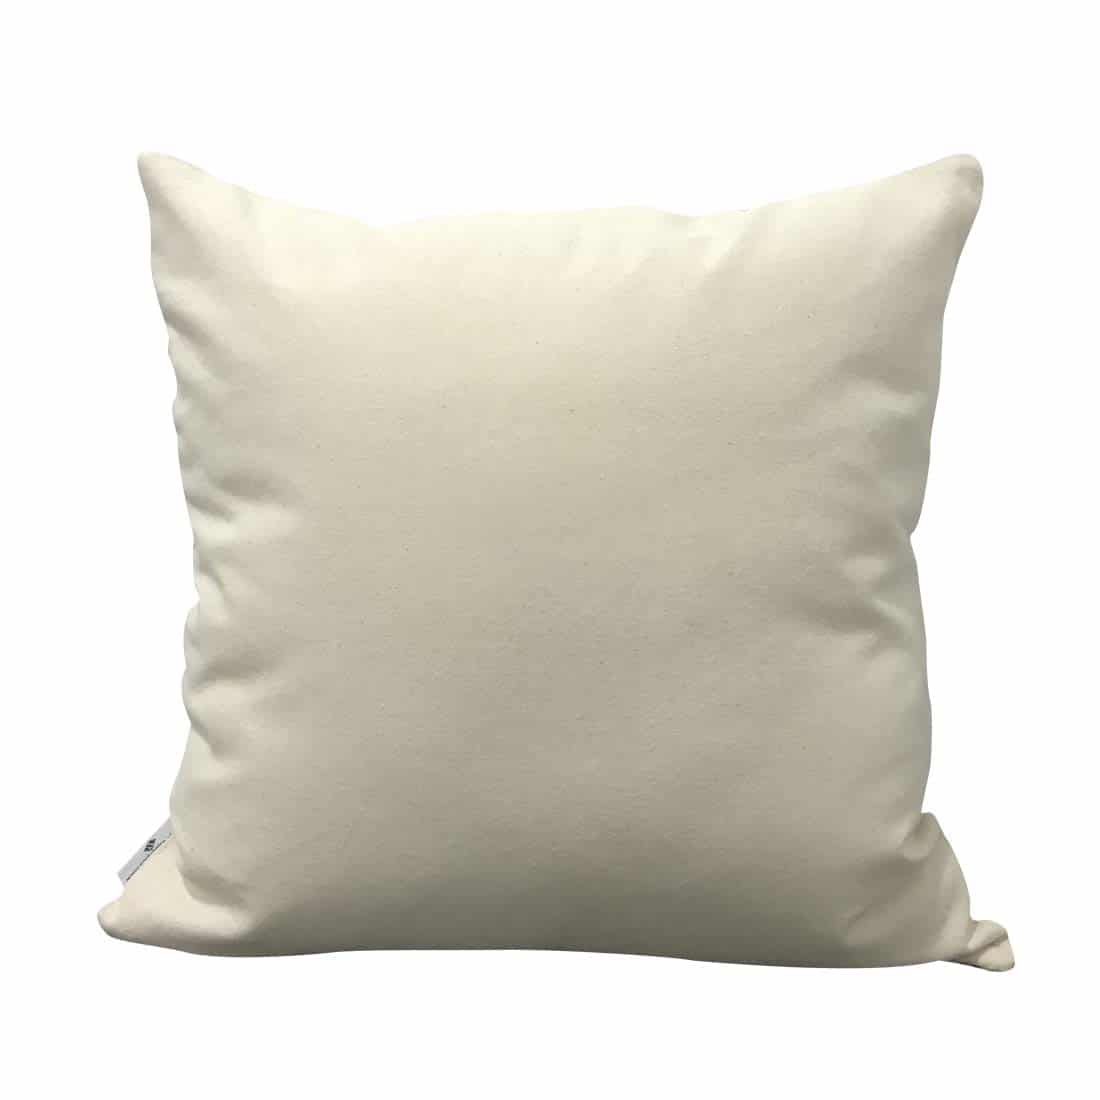 Decorative Dendritic Taupe Cotton Cushion Cover 12x18